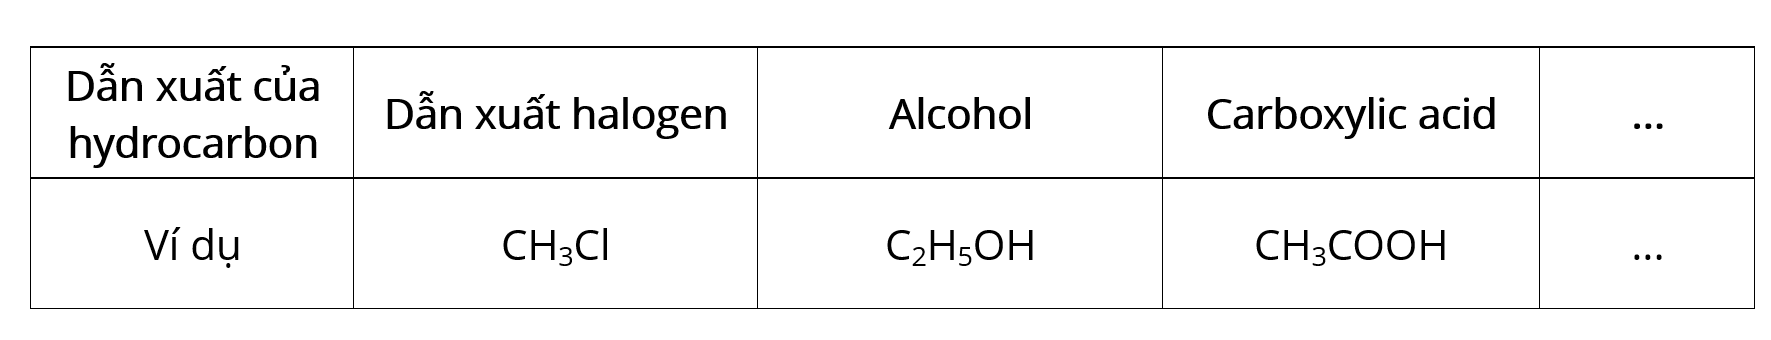 Một số loại dẫn xuất của hydrocarbon olm.